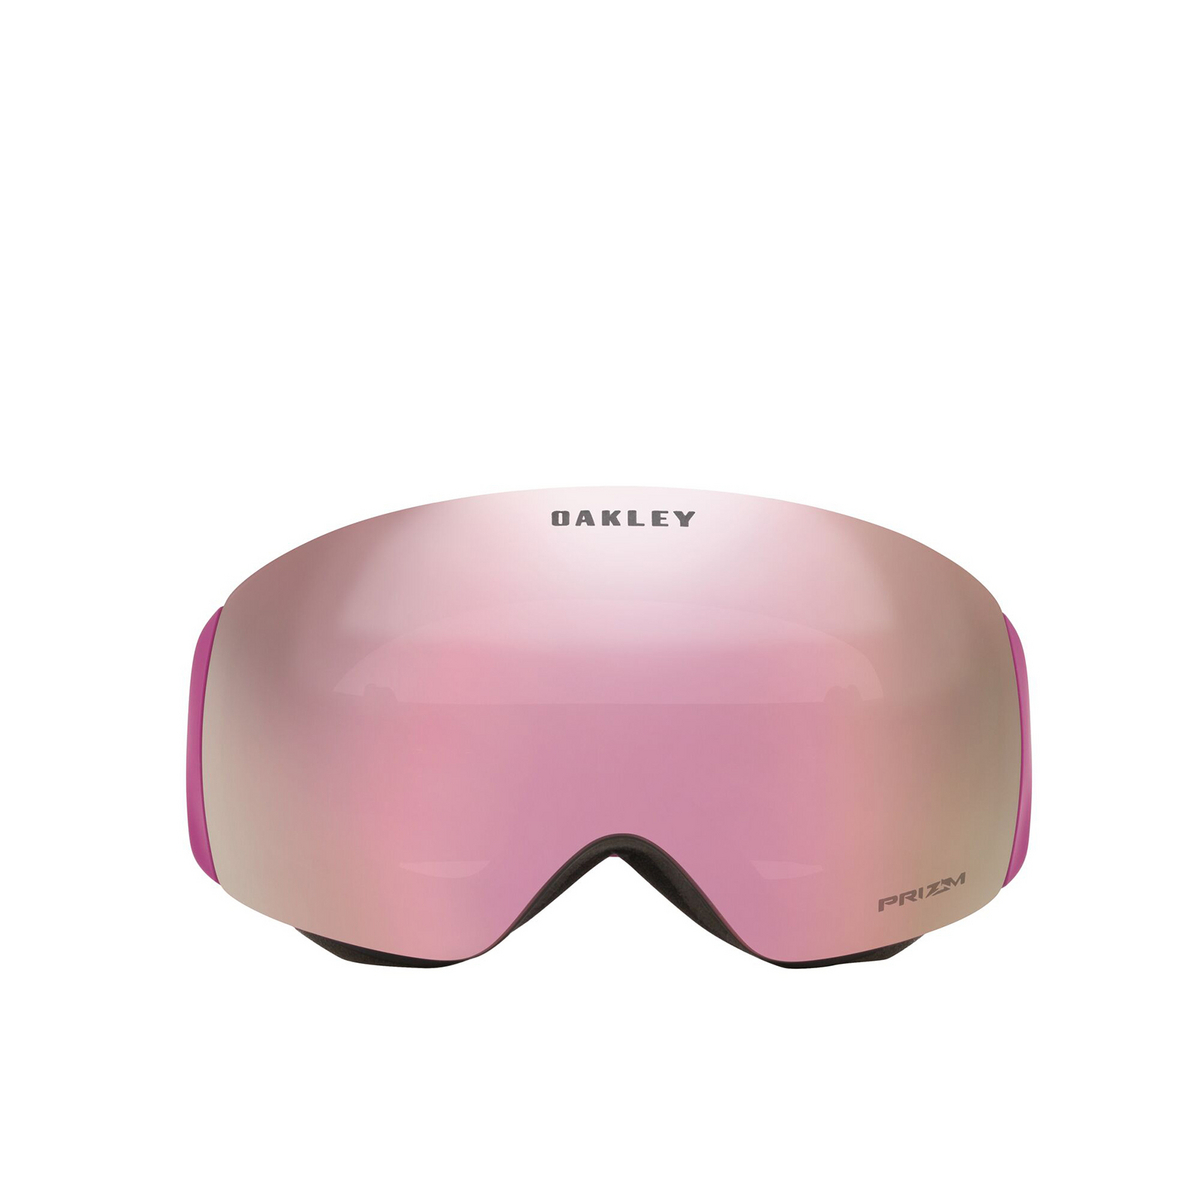 Oakley FLIGHT DECK M Sunglasses 7064B4 Ultra Purple - front view